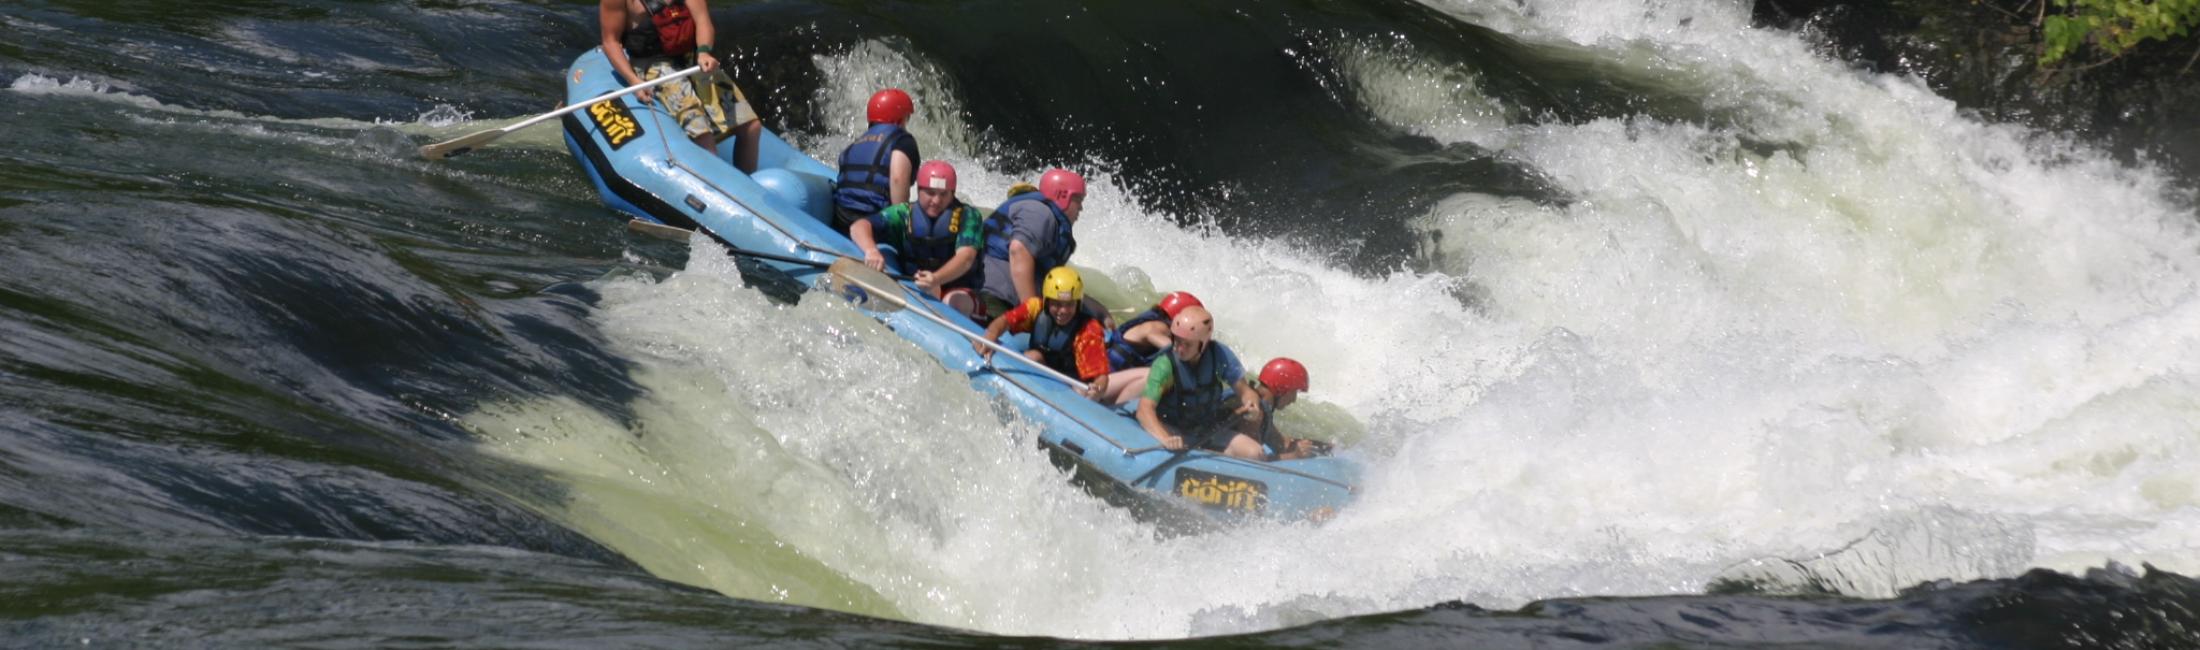 Raft with 8 people at Bujagali rapids (Jinja Uganda)